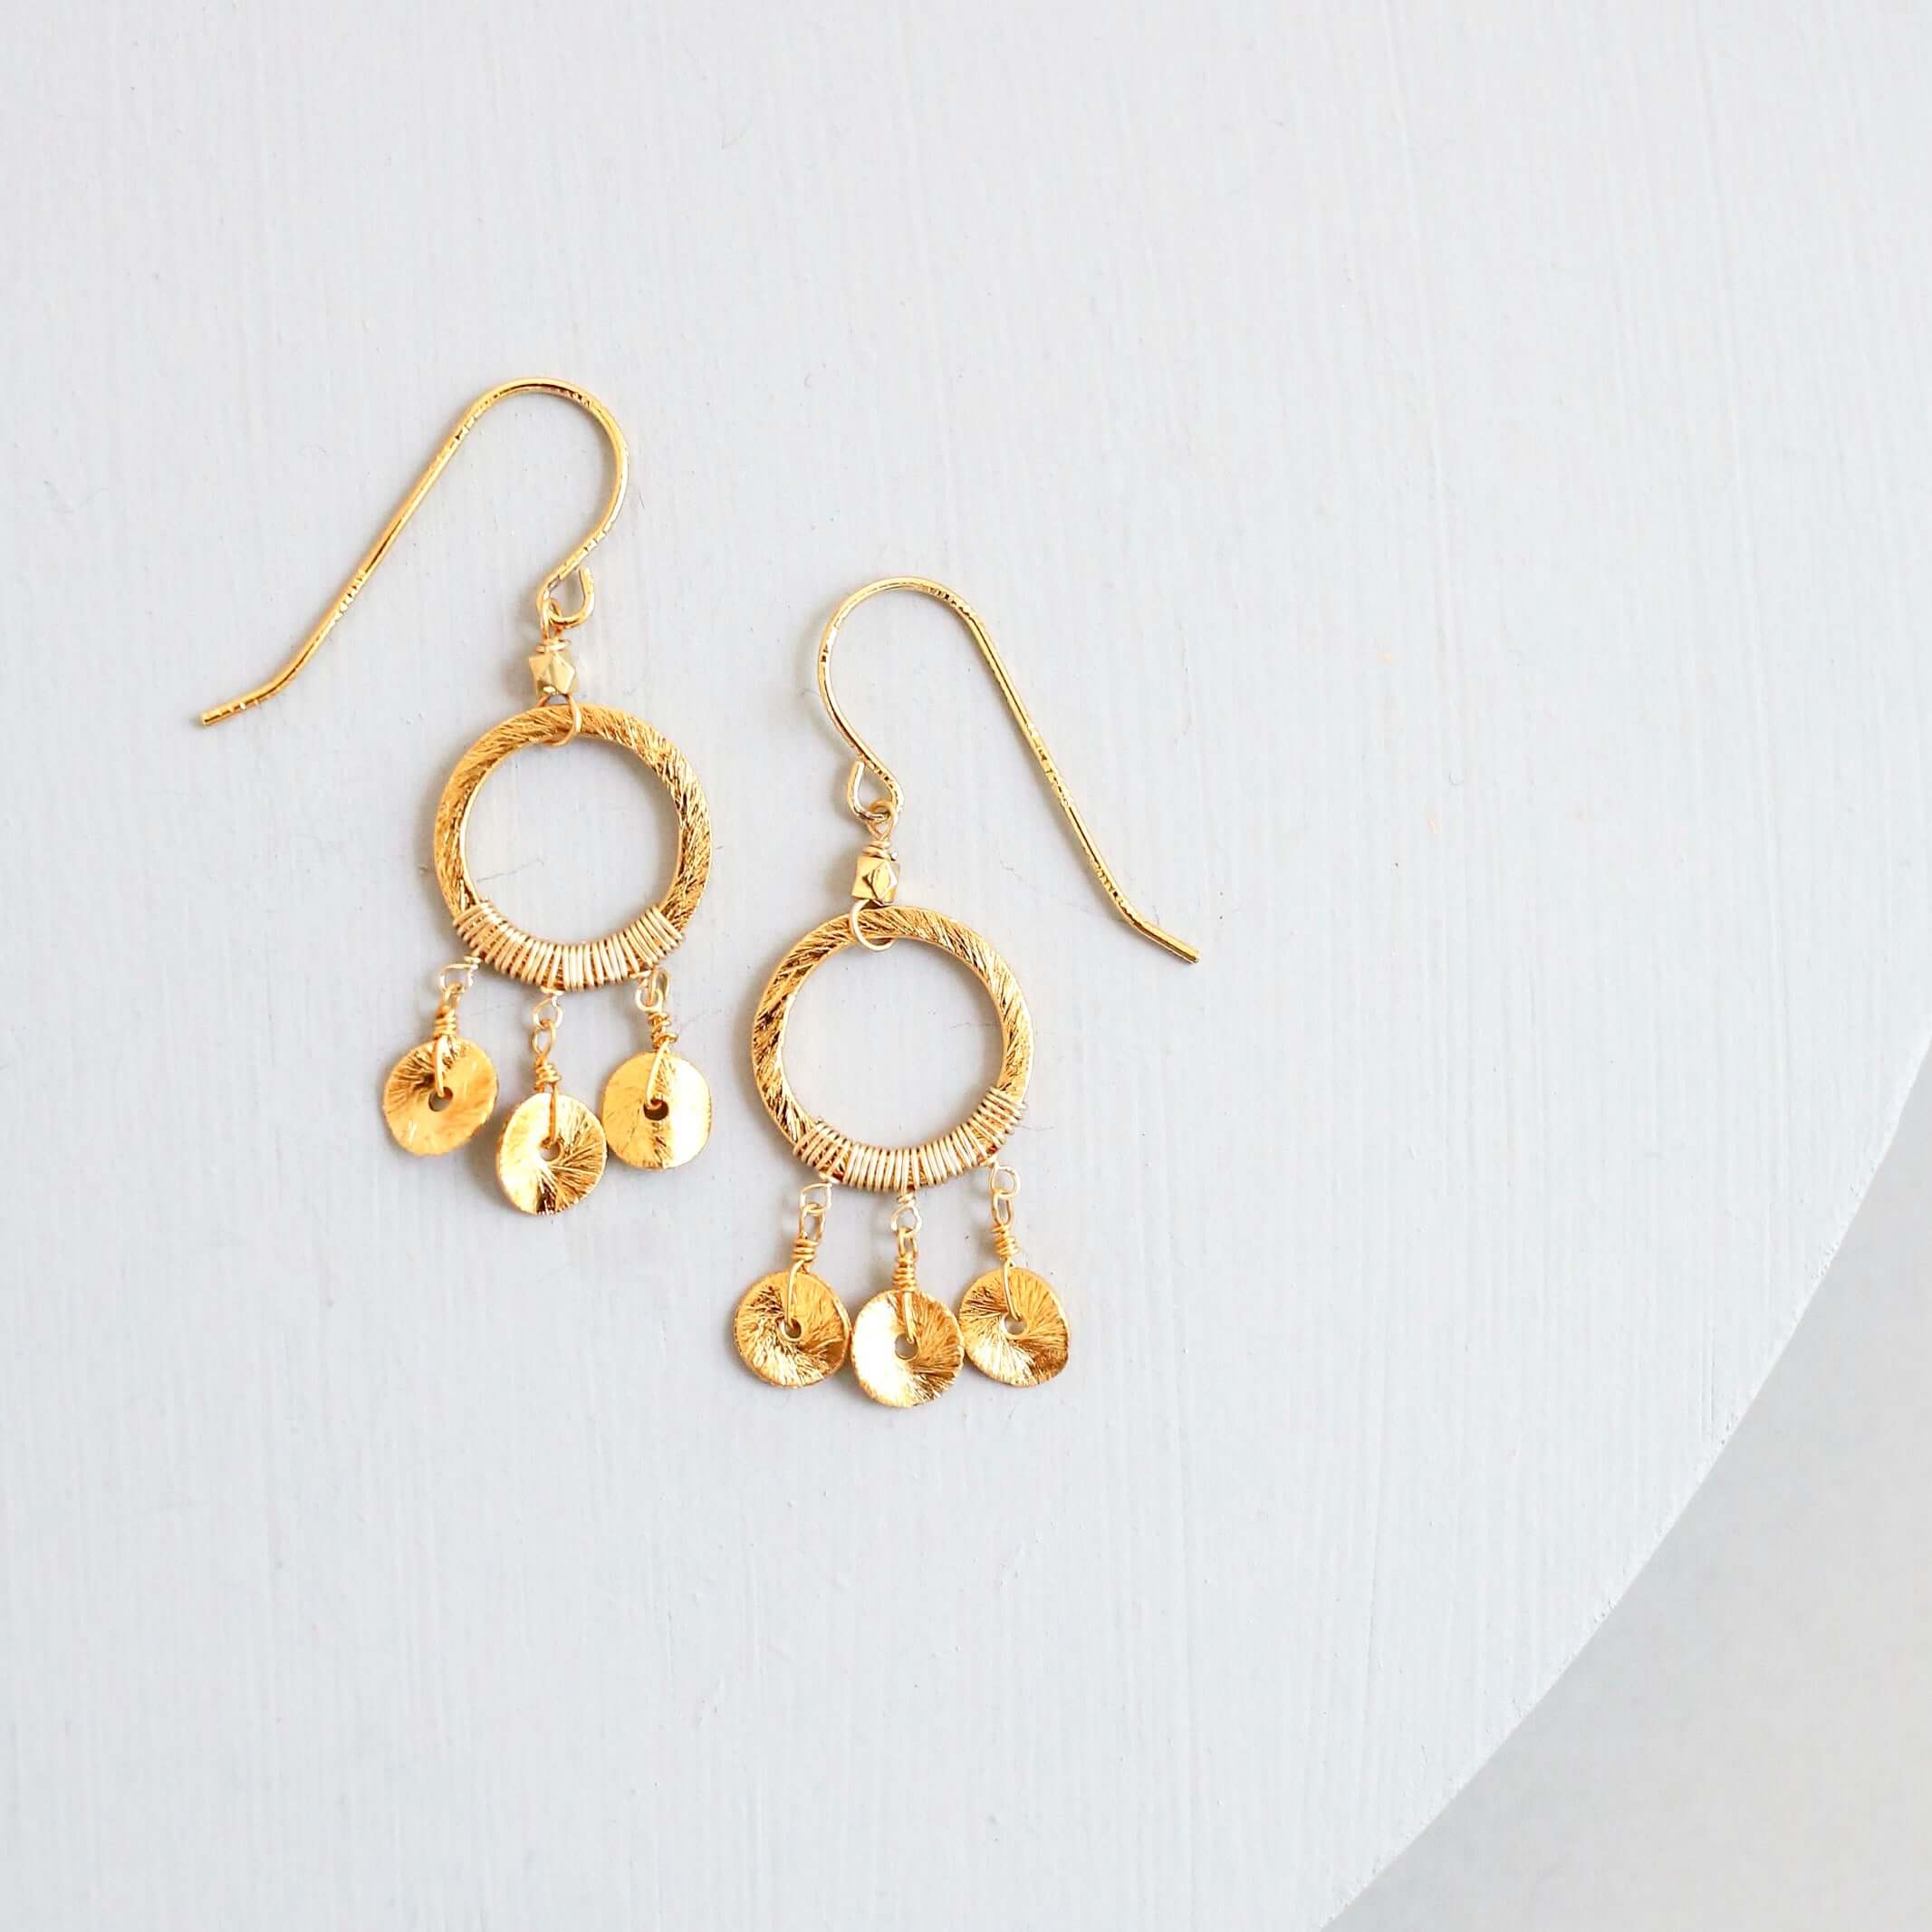 Boho Mini Dream Catcher Earrings with Gold Dangles